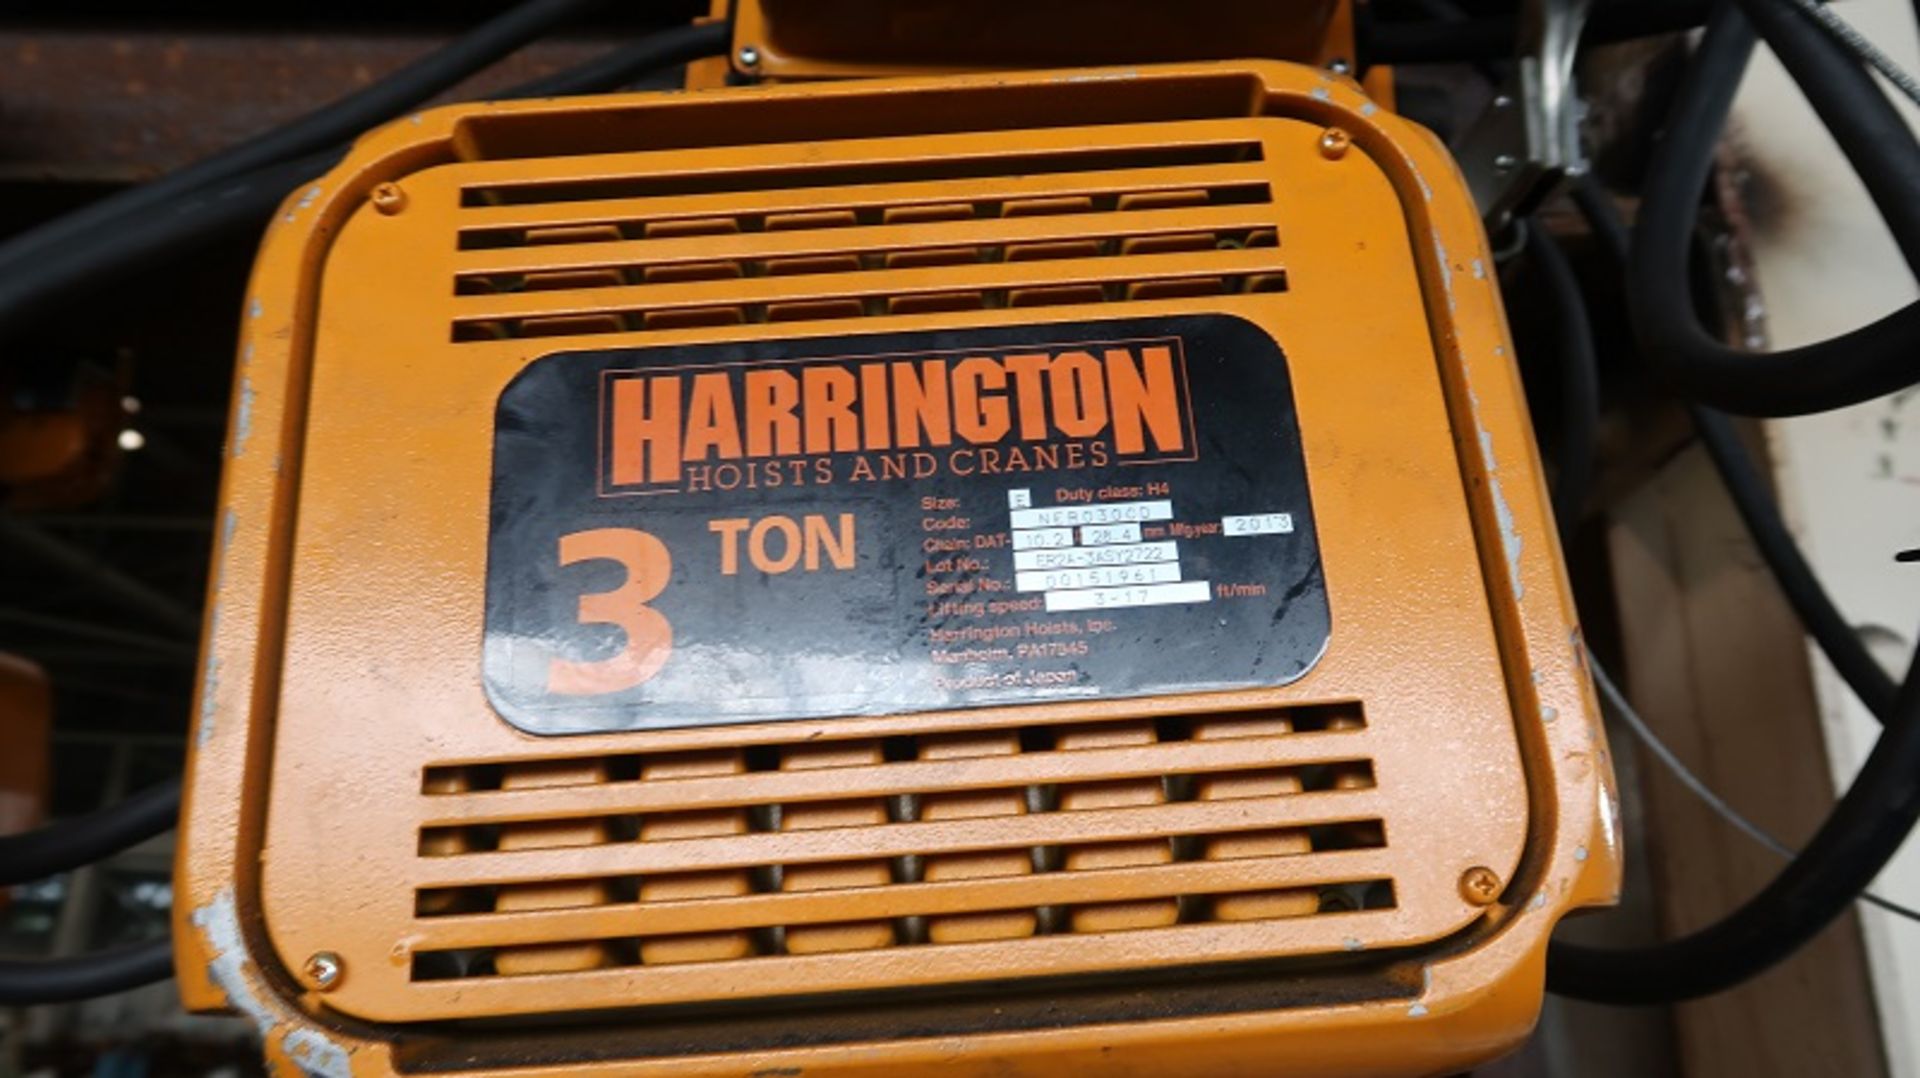 3-Ton Harrington Hoist (Model: ER2A-3ASY2722, SN: 00151961) with 3-Ton Harrington Powered Driven - Image 2 of 3